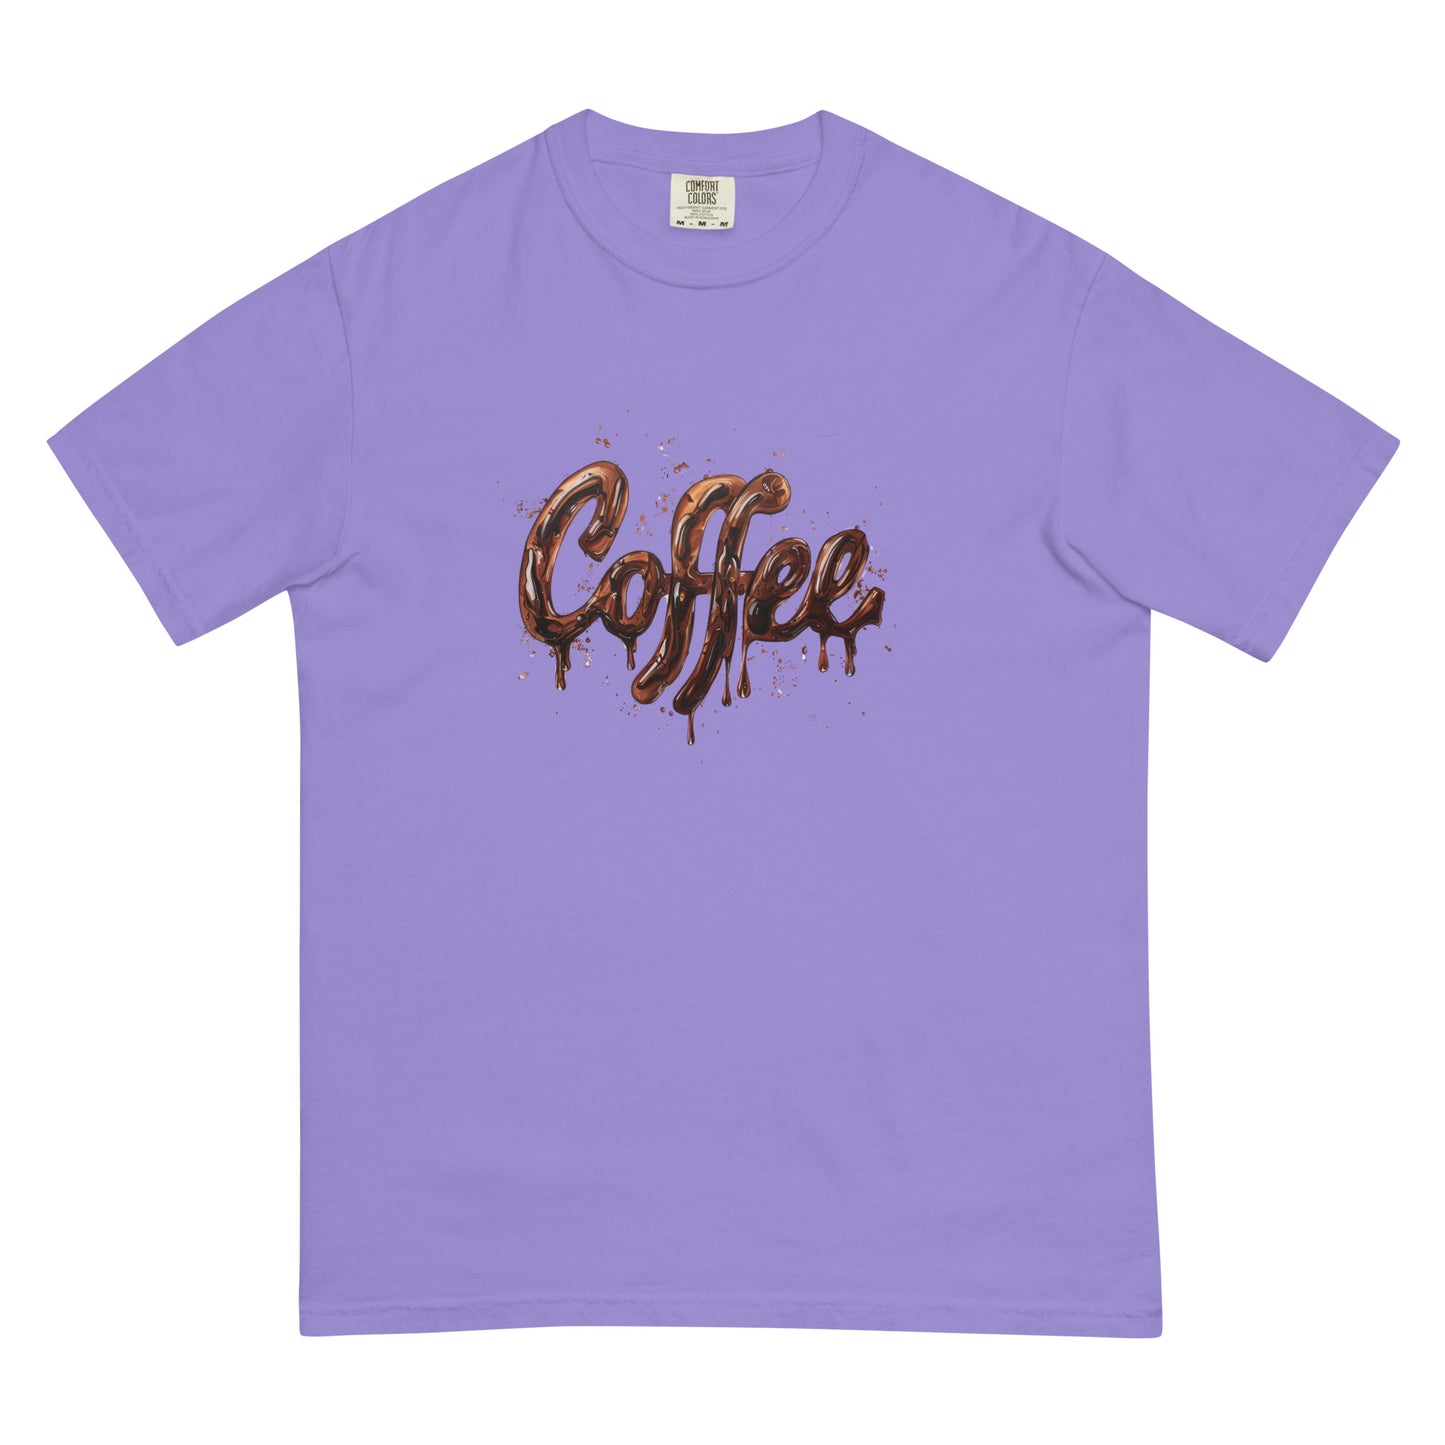 Coffee in Cursive t-shirt - Unisex